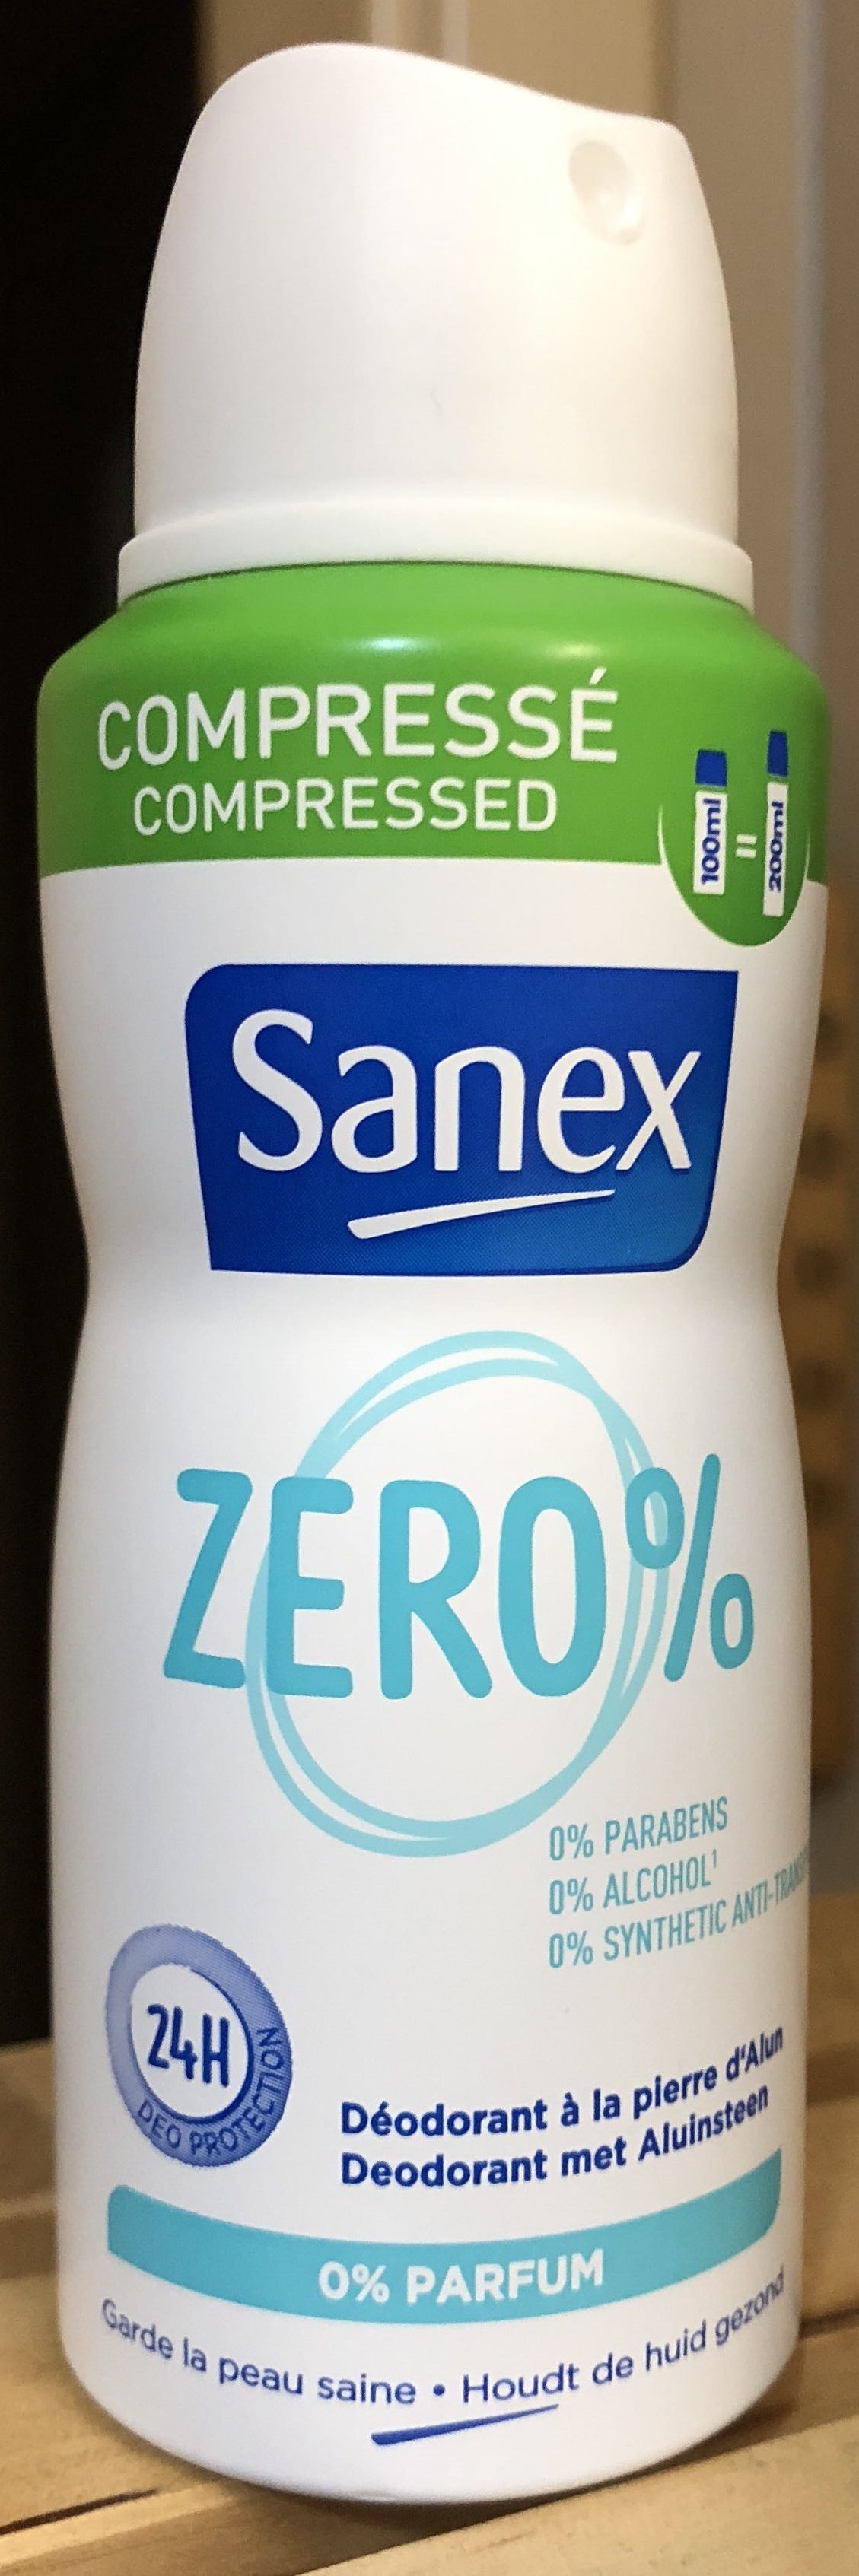 Sanex zero% - Product - fr